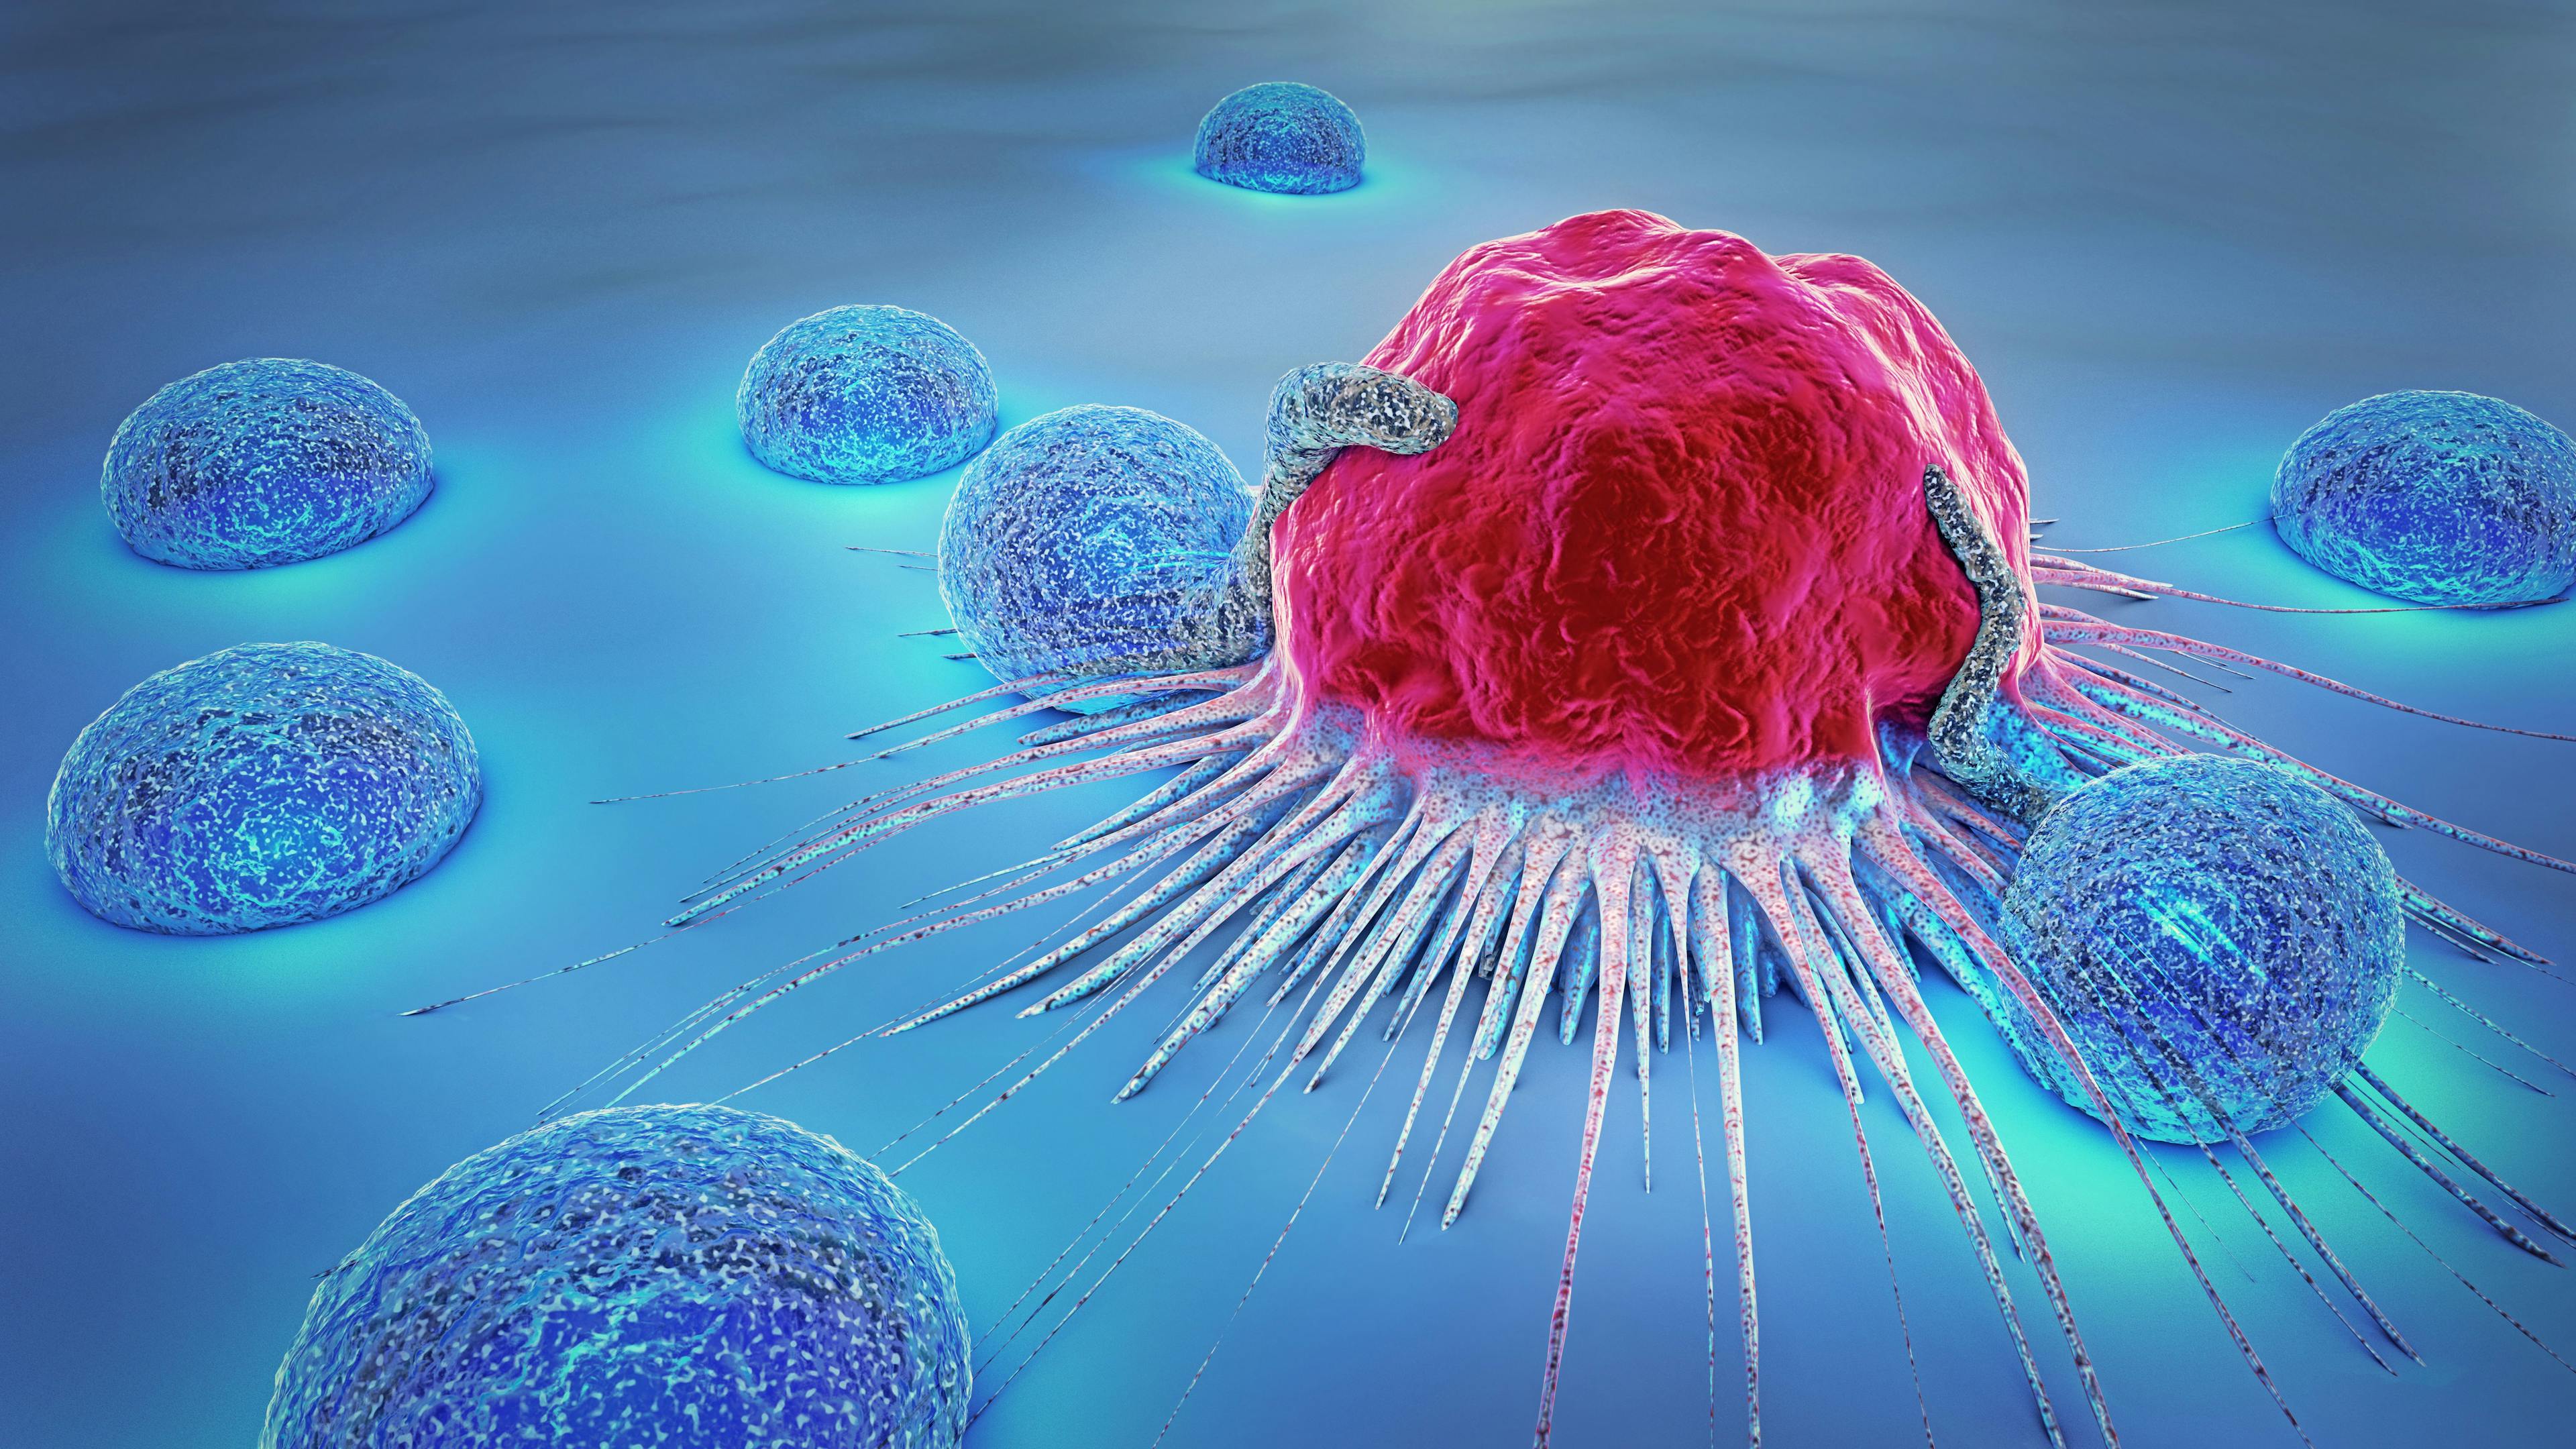  3d illustration of a cancer cell and lymphocytes | Image Credit: © Christoph Burgstedt - www.stock.adobe.com